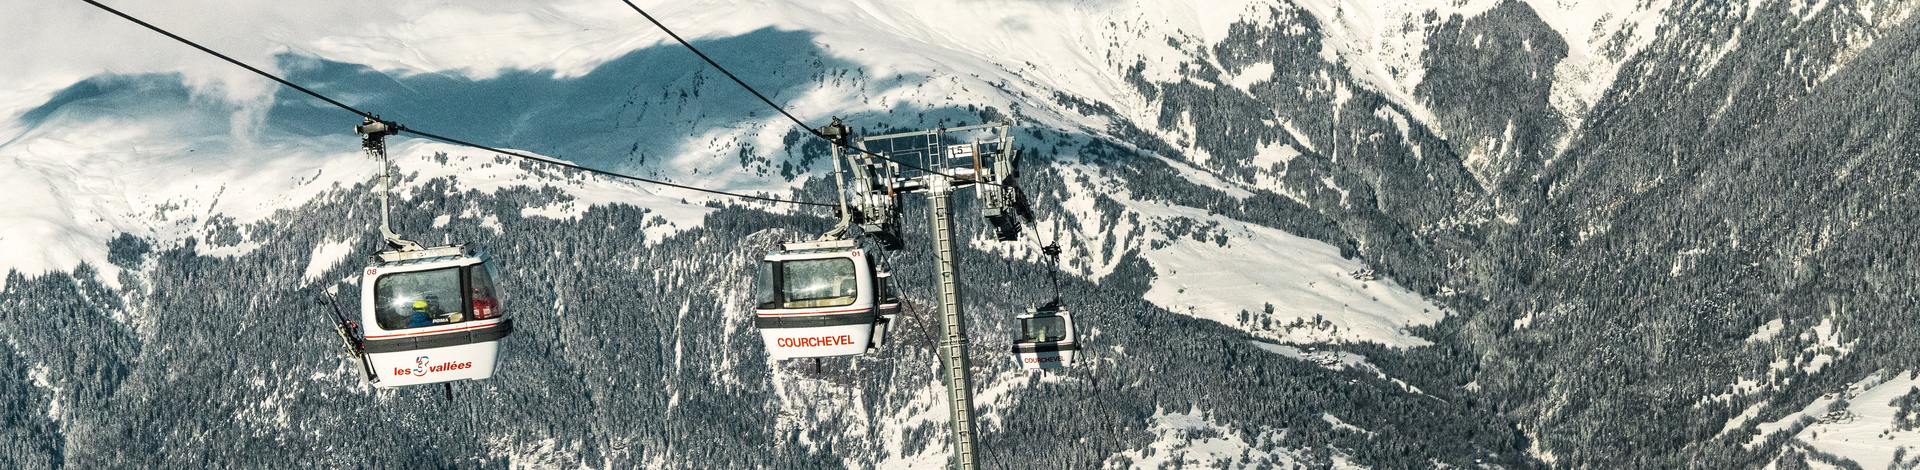 The Vizelle gondola lift, Courchevel in the 3 Valleys